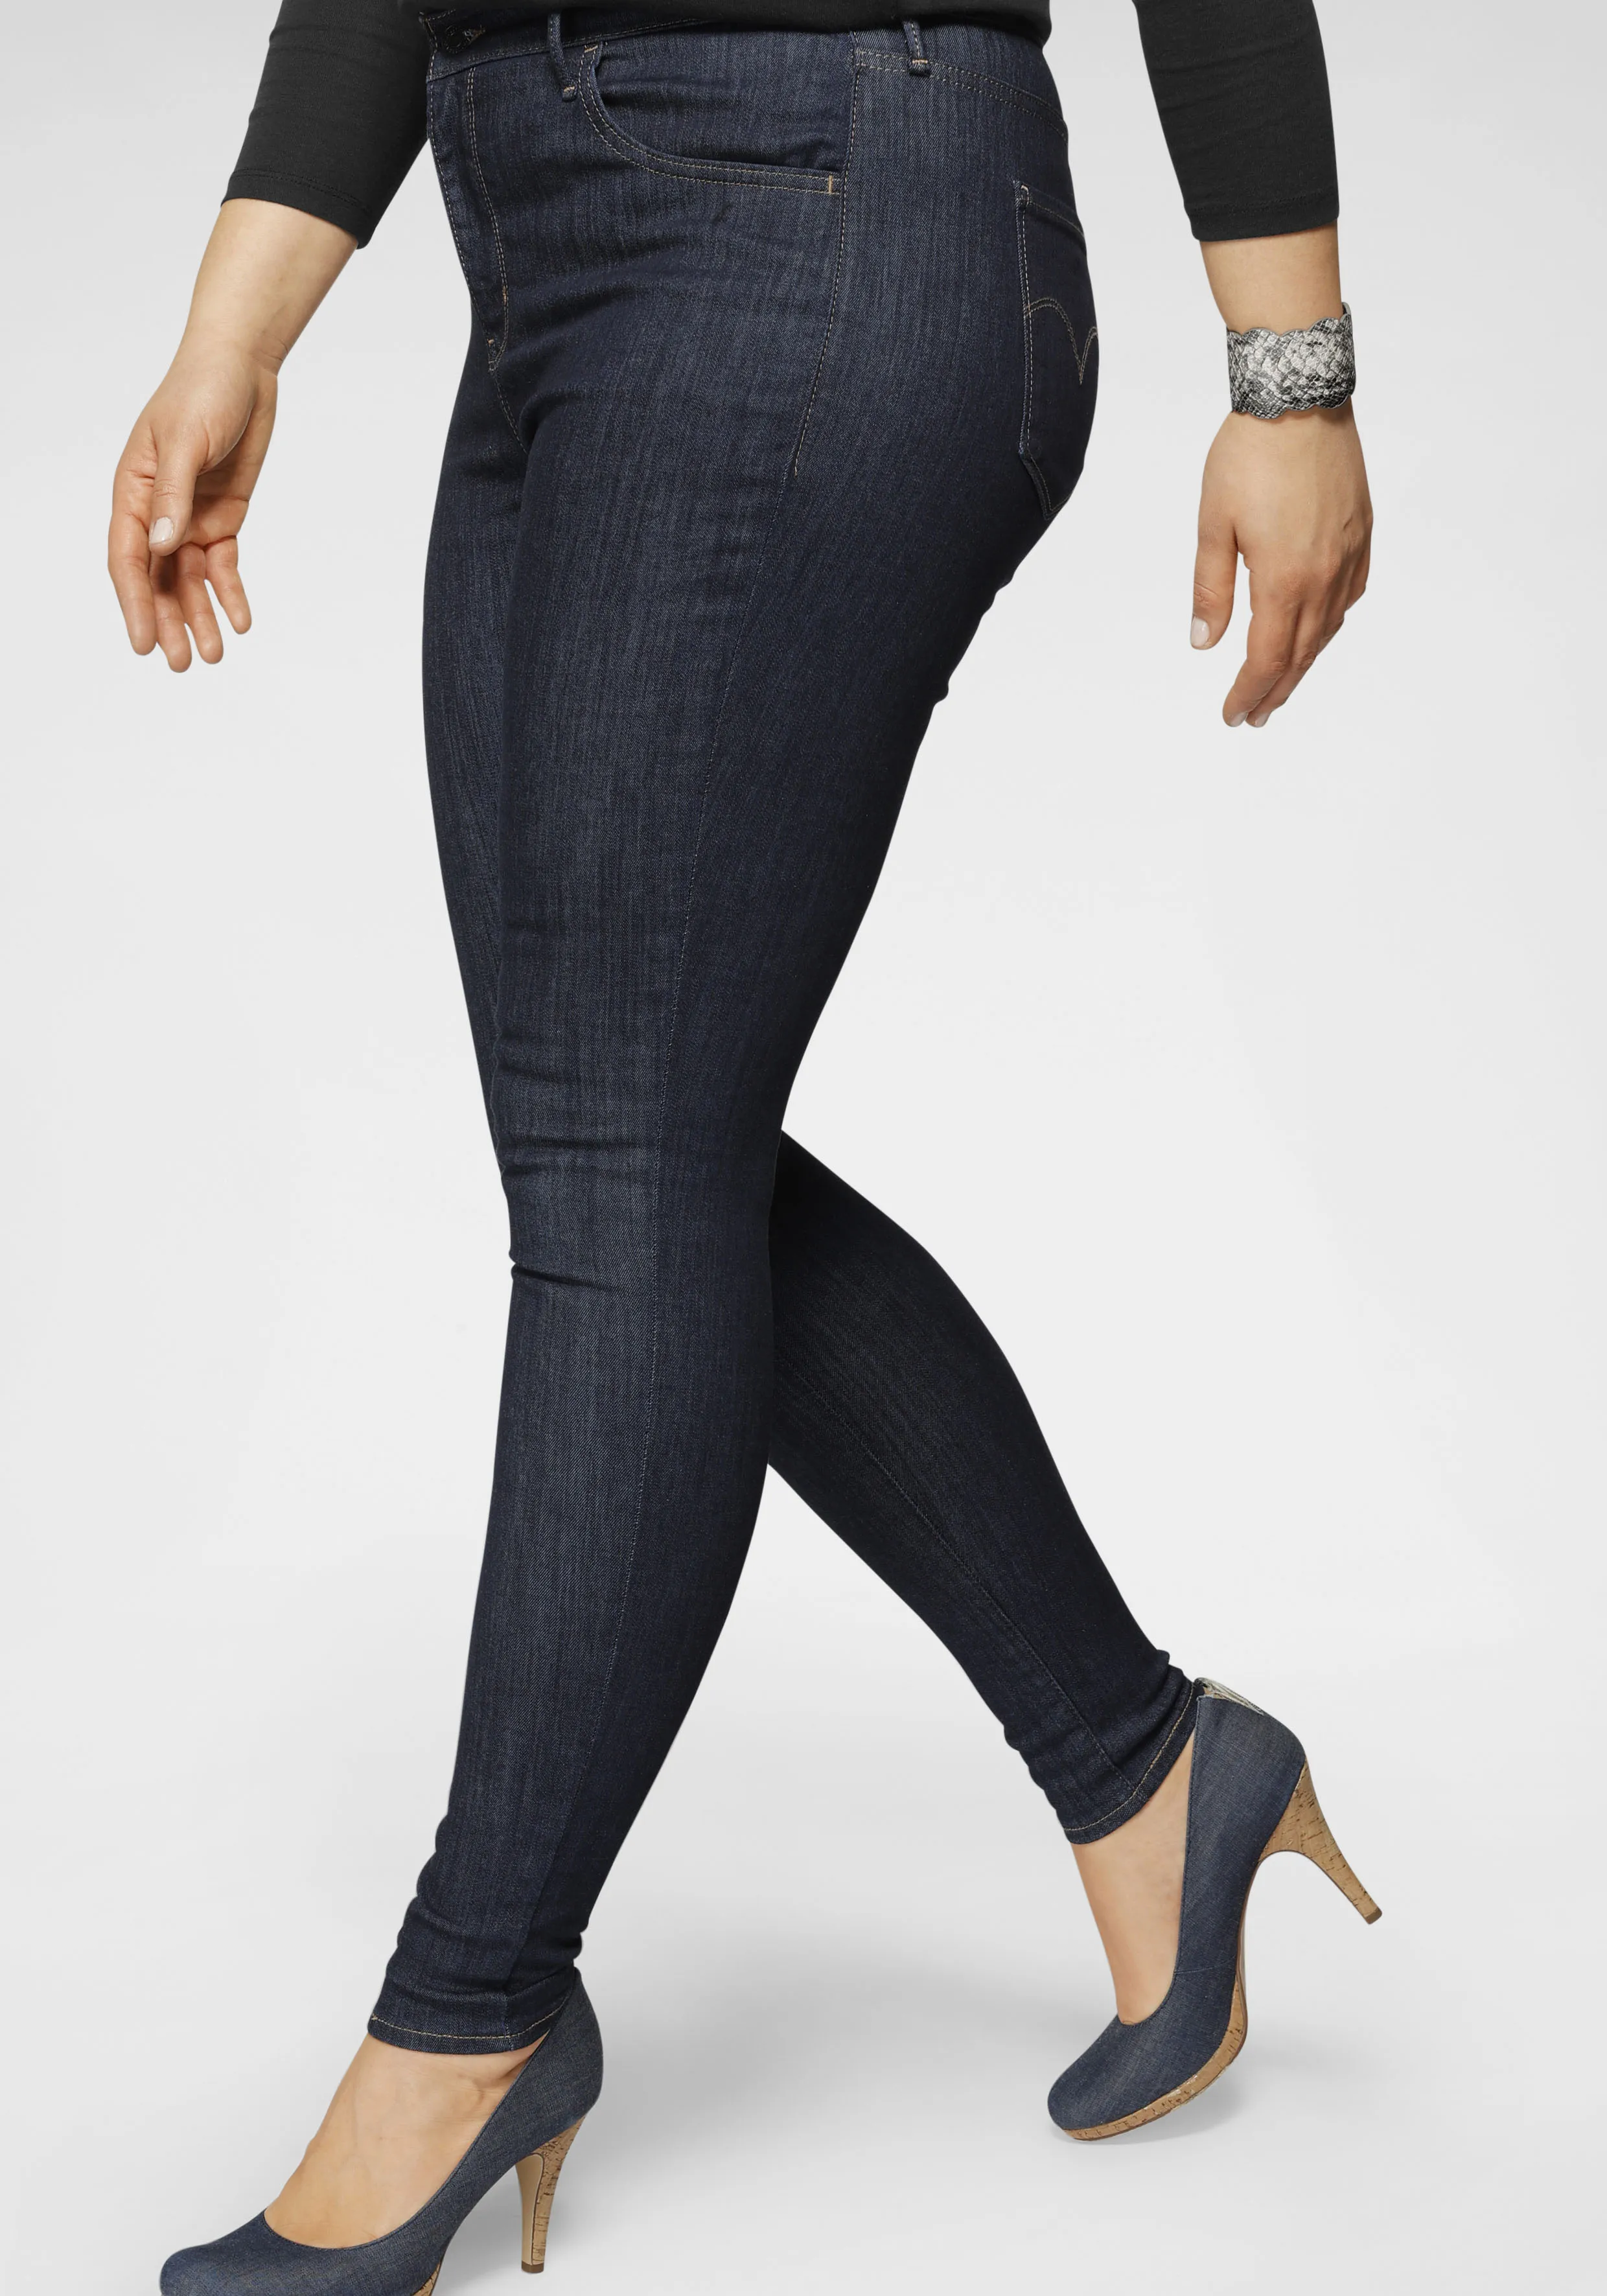 Skinny-fit-Jeans LEVI'S PLUS "720 High-Rise" Gr. 14 (44), Länge 29, blau (rinsed) Damen Jeans Röhrenjeans mit hoher Leibhöhe